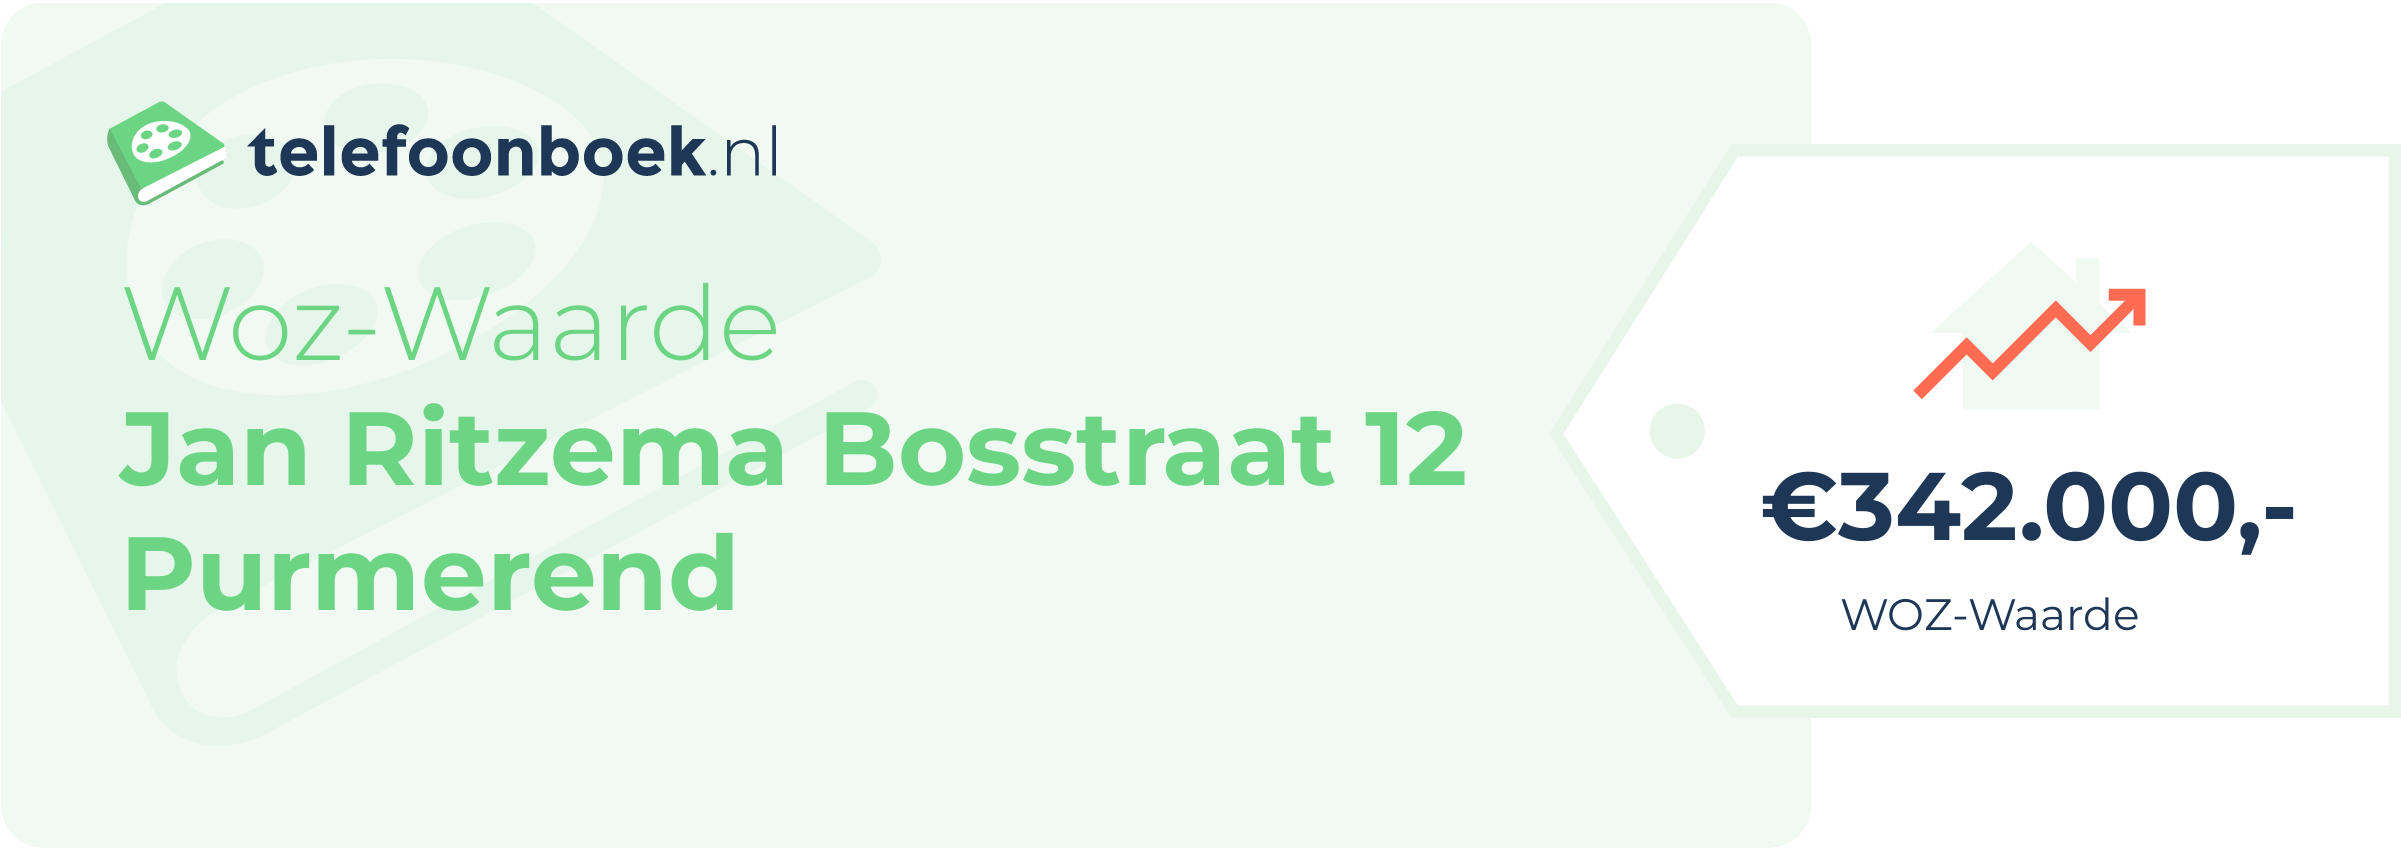 WOZ-waarde Jan Ritzema Bosstraat 12 Purmerend